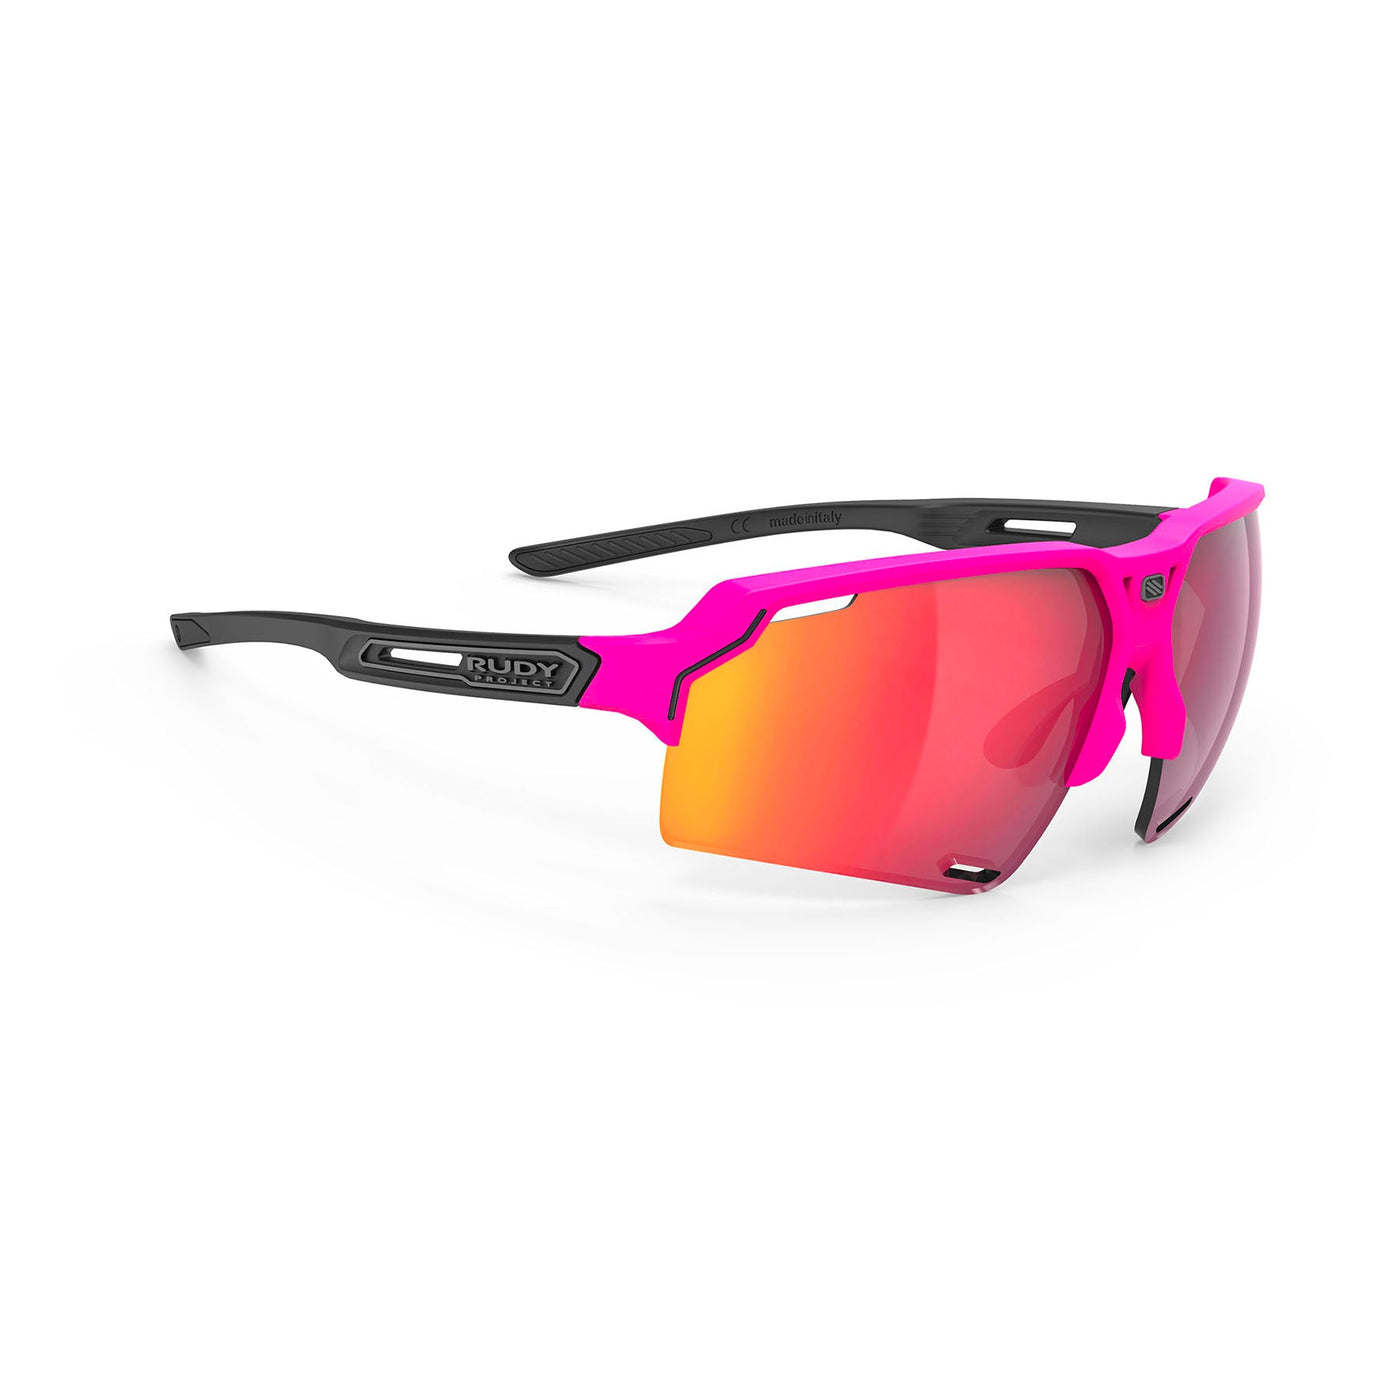 Rudy Project Deltabeat Sunglasses, Black Matte & Pink Fluo - Multilaser Red - Heavyglare